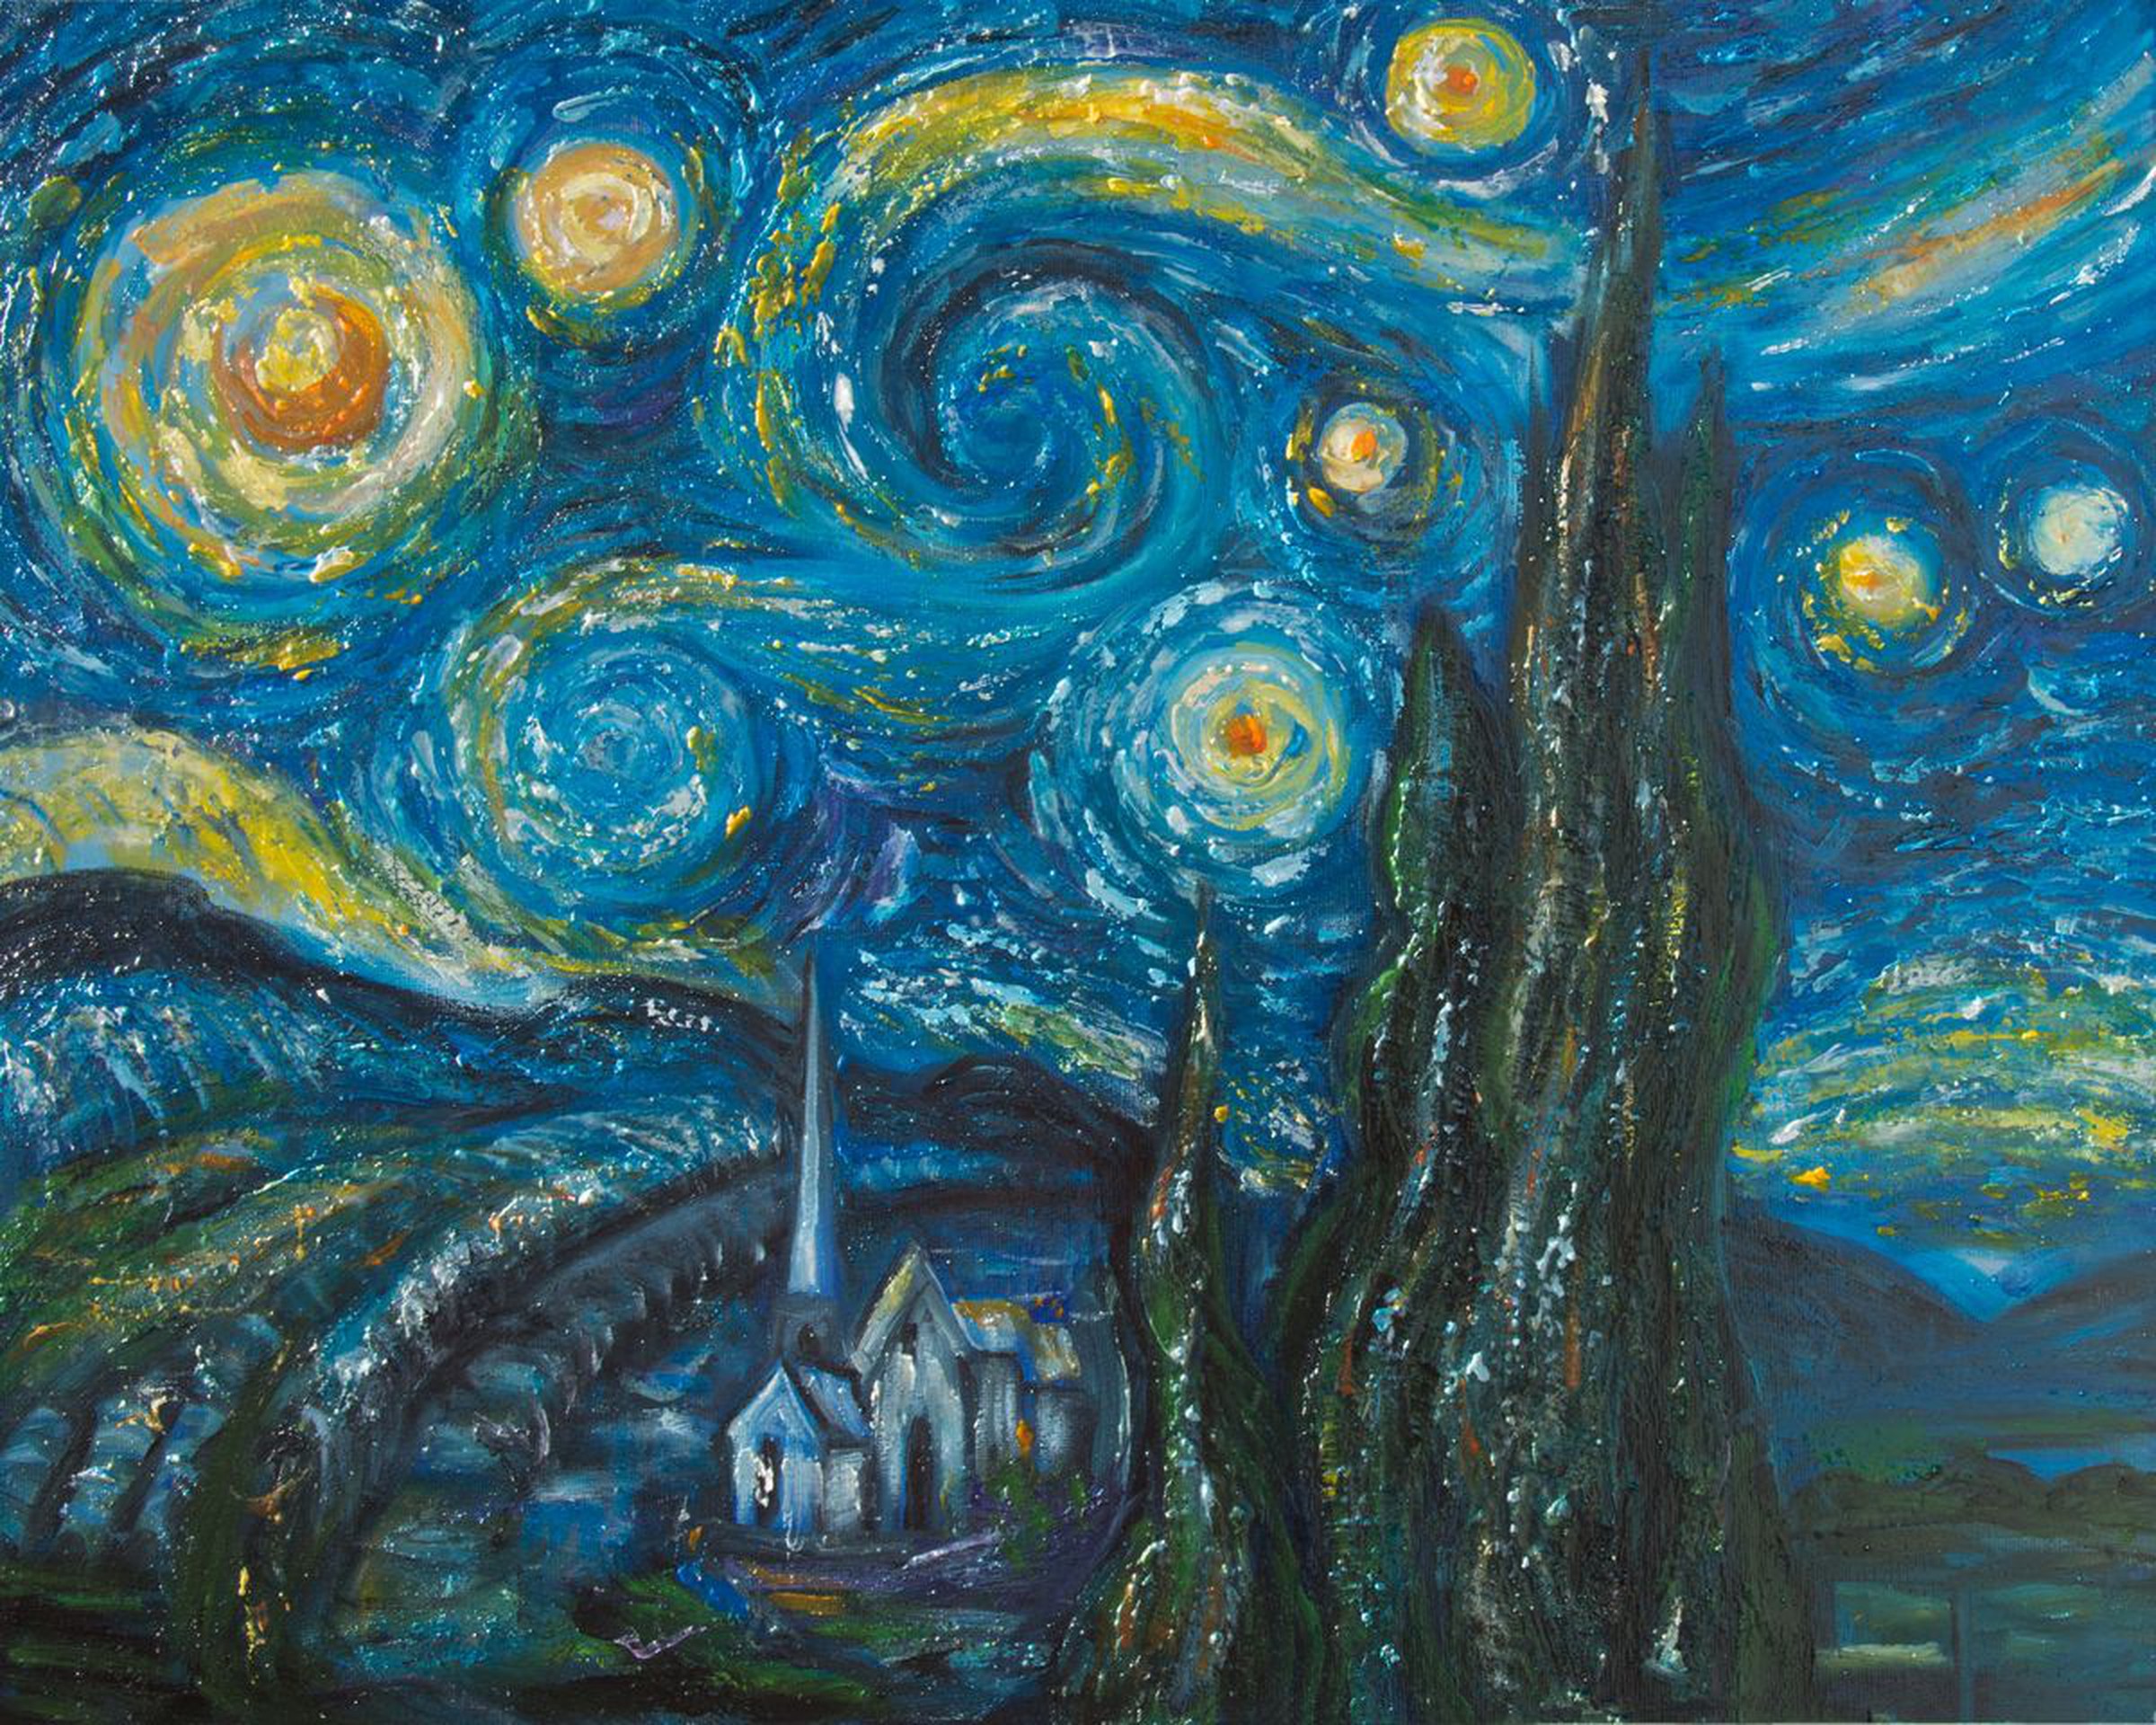 Starry Night van Gogh Digital Art